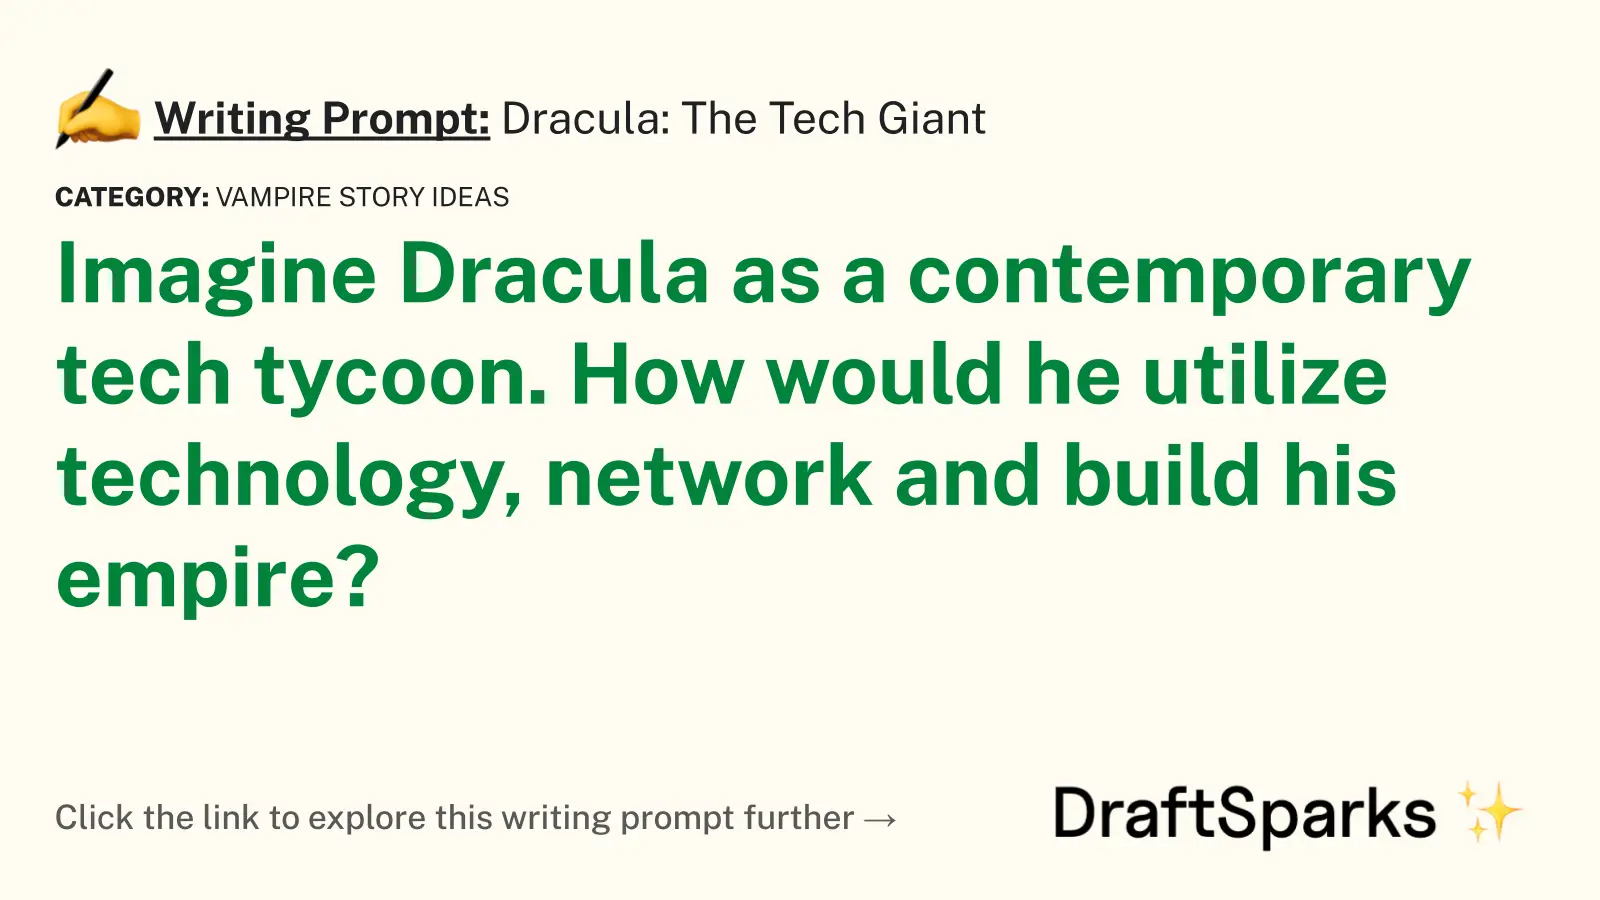 Dracula: The Tech Giant